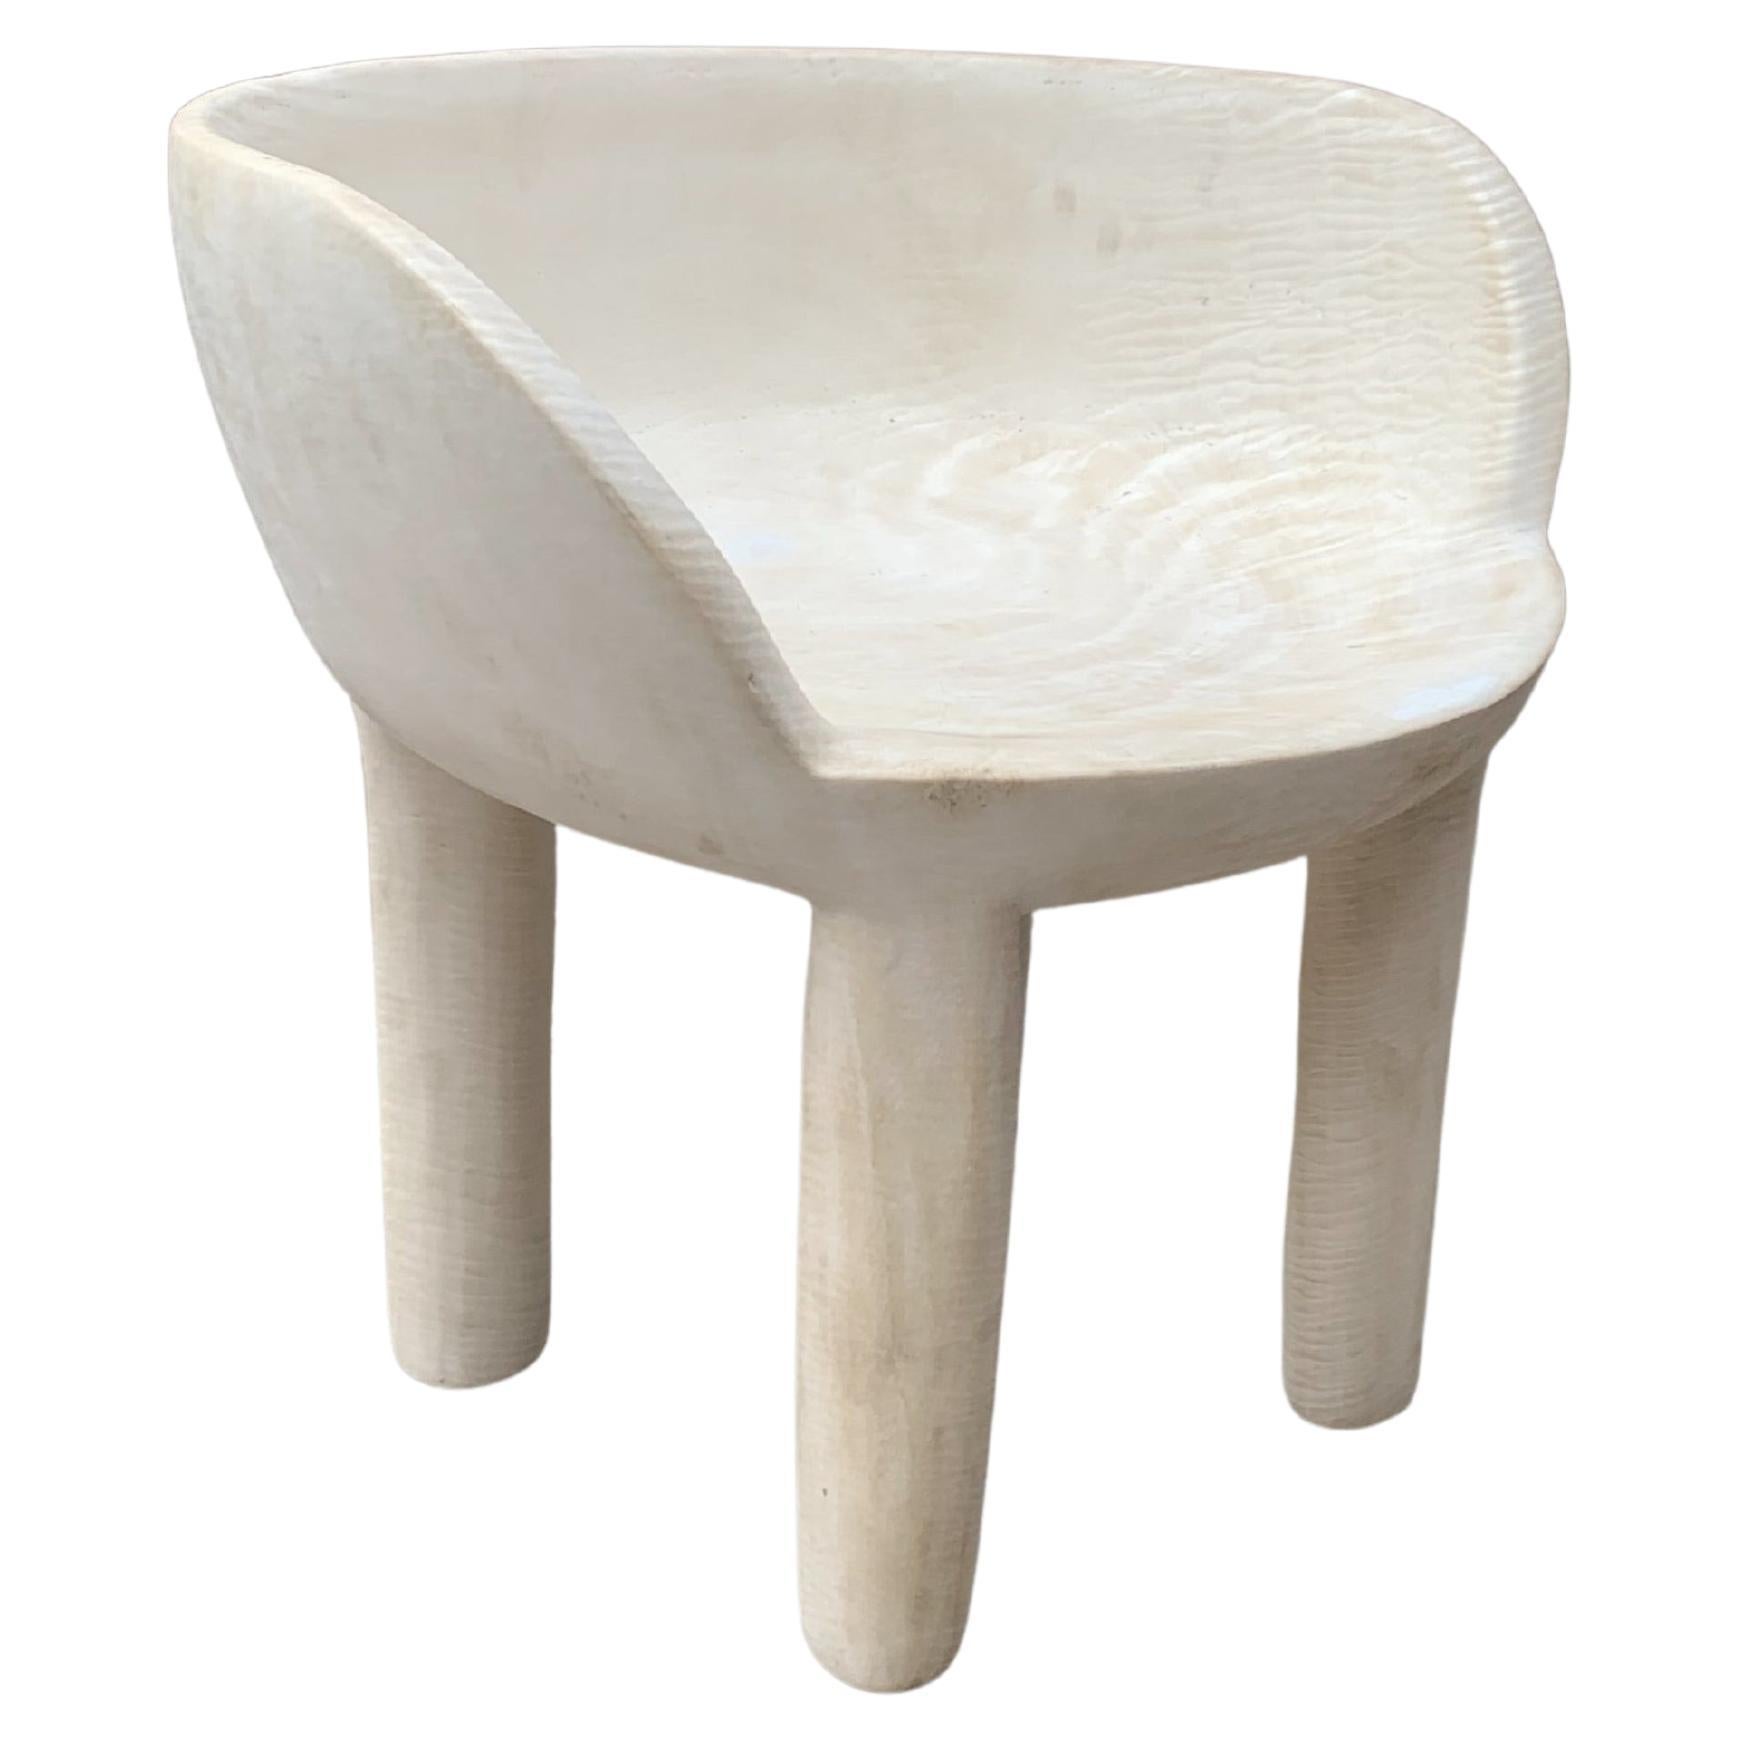 Sculptural Mango Wood Chair Bleached Finish Modern Organic